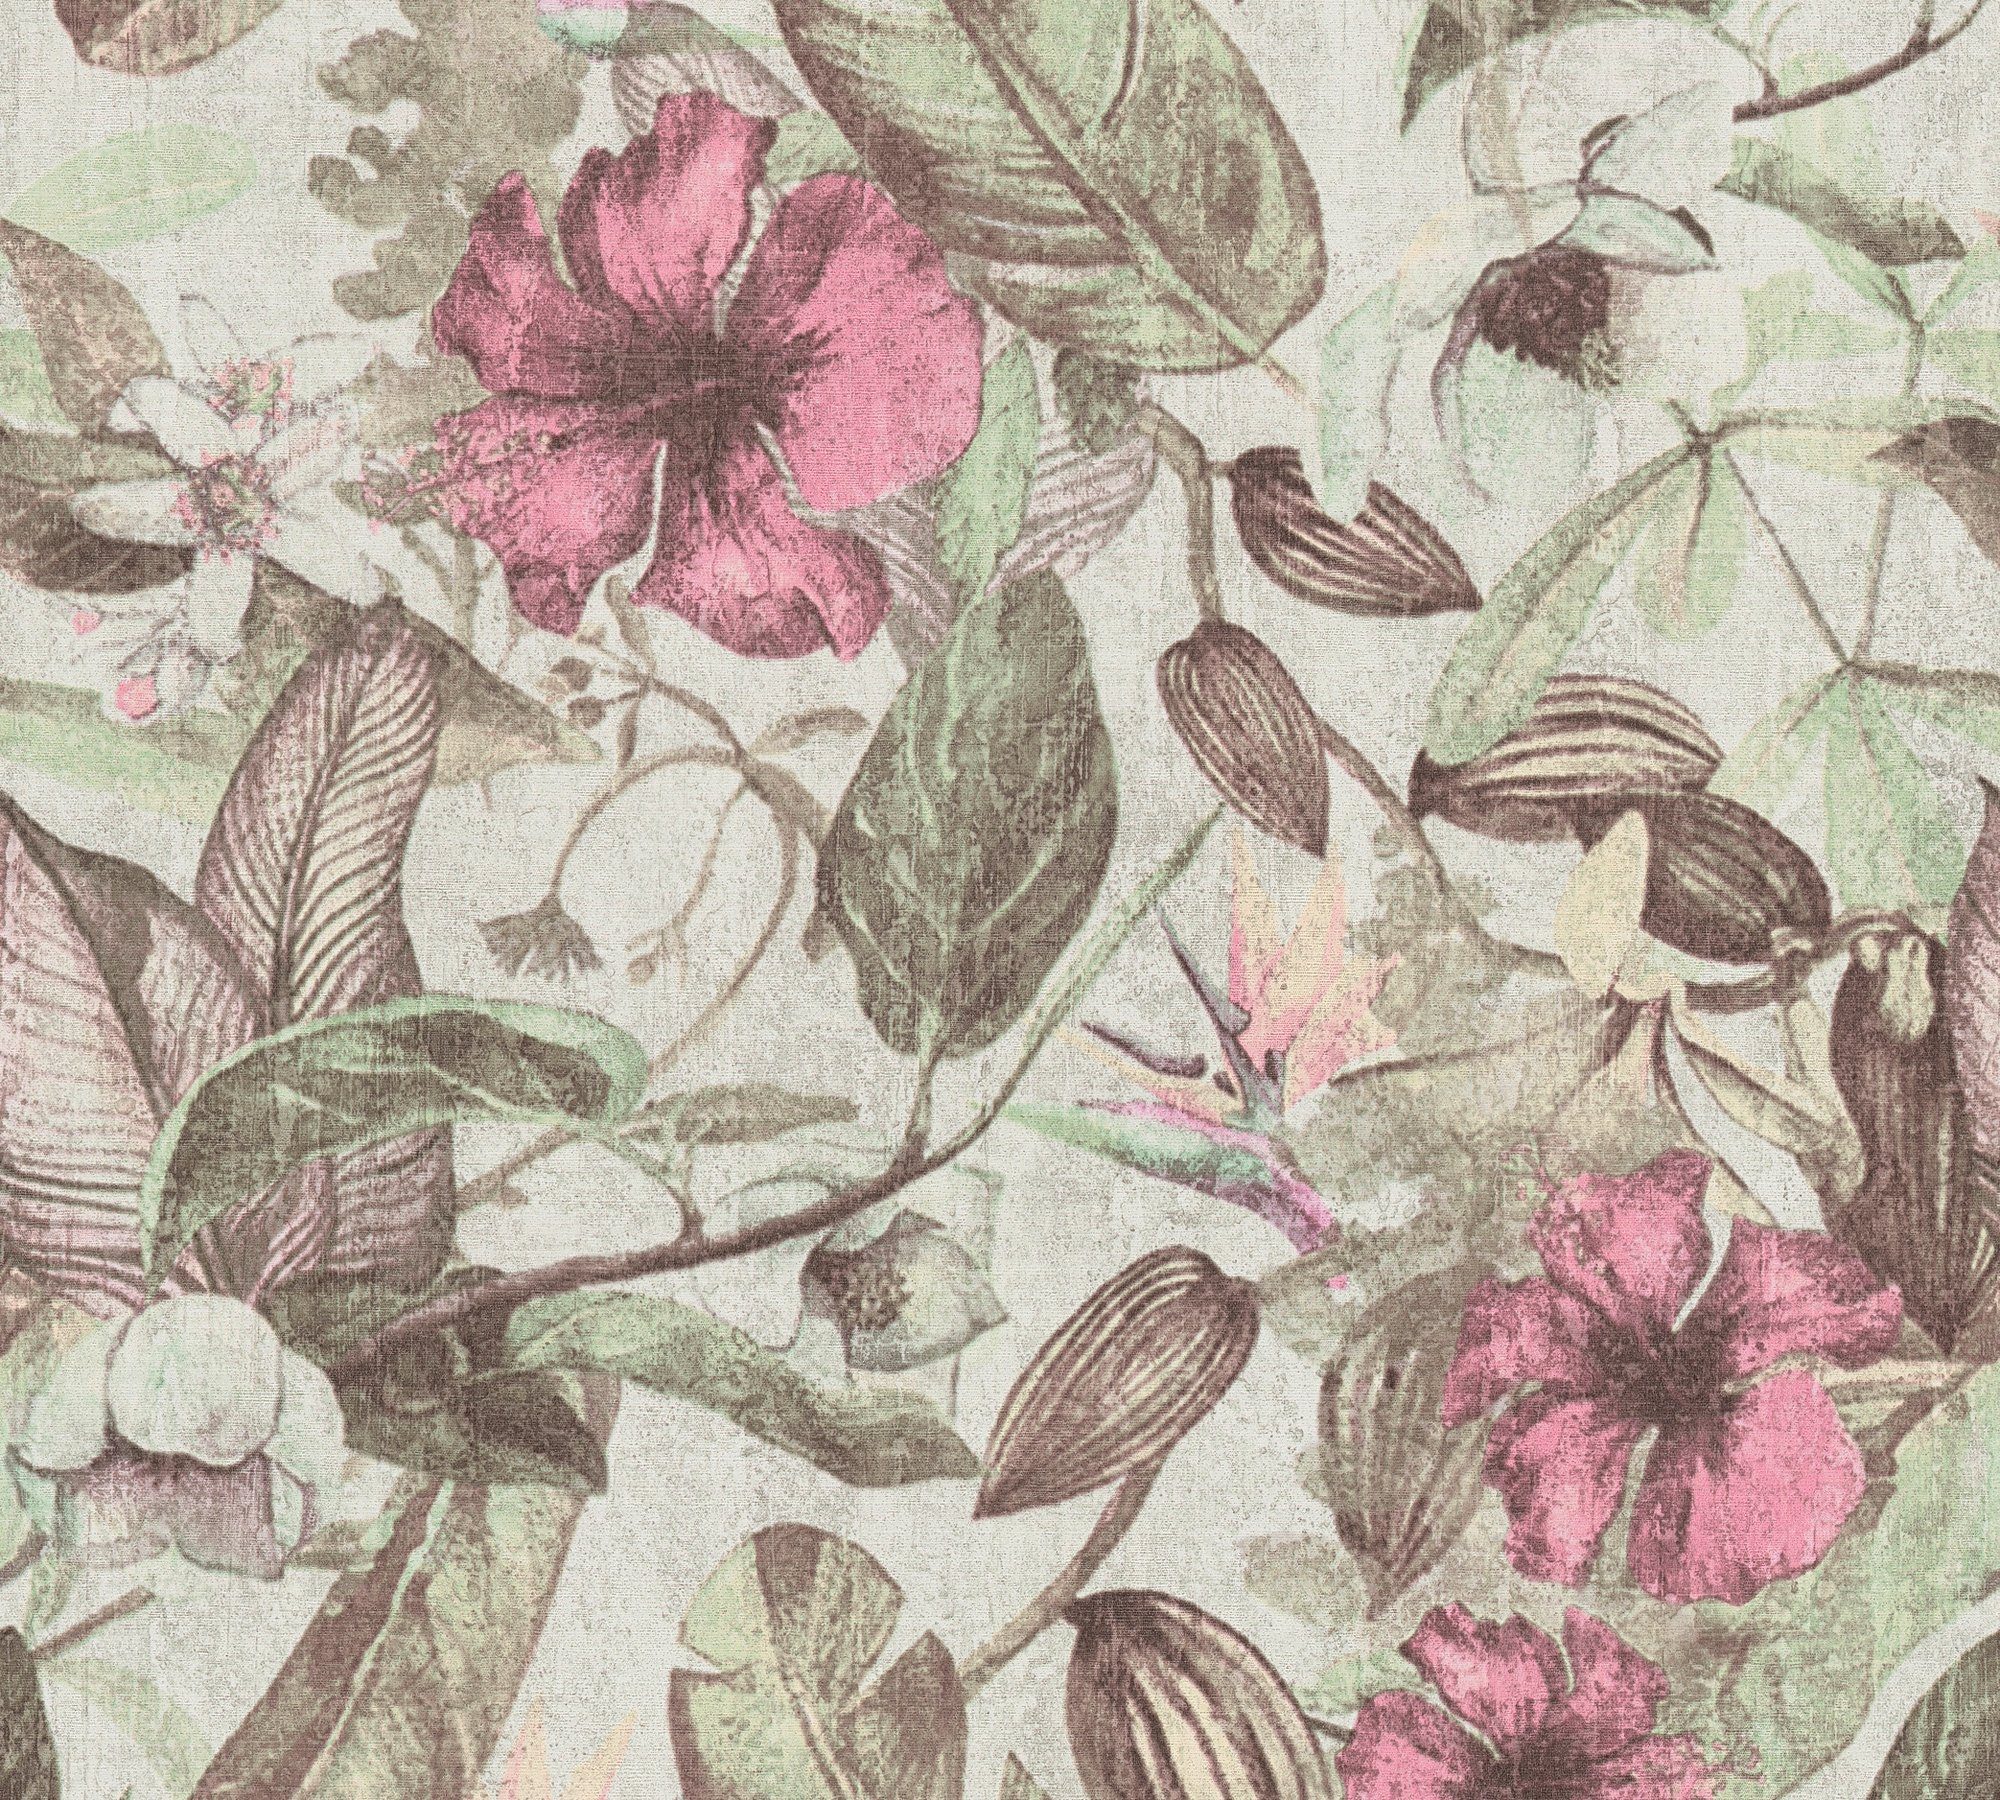 Tapete Motiv, Greenery mit Blätter Blumen floral, Création A.S. Vliestapete bunt/rosa